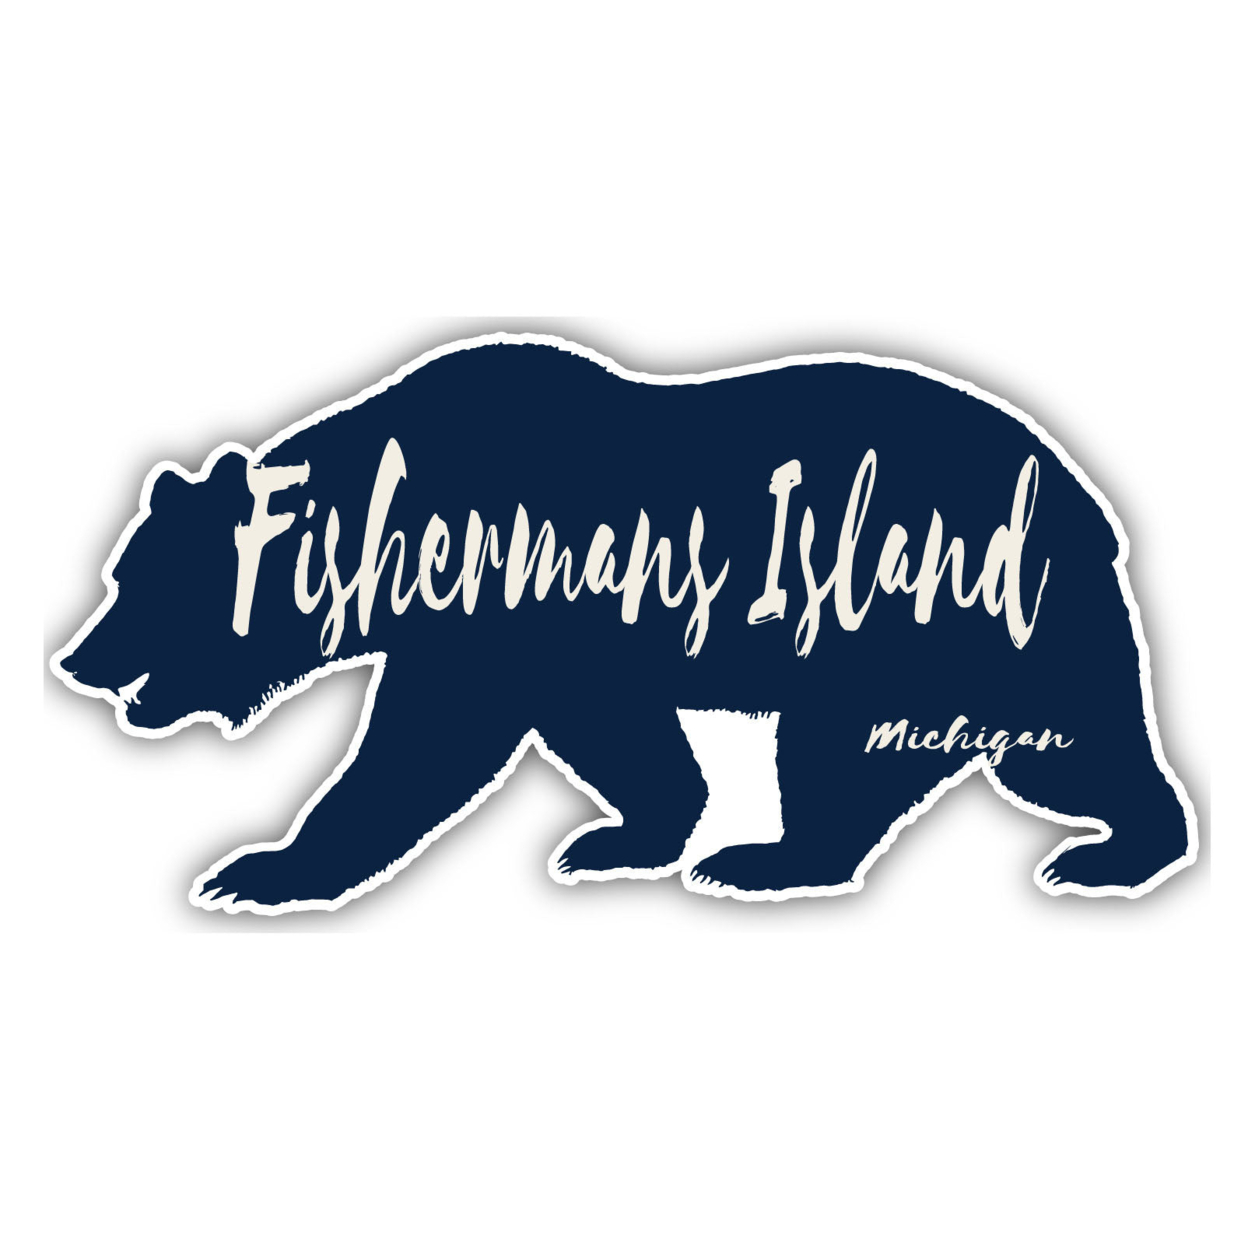 Fishermans Island Michigan Souvenir Decorative Stickers (Choose Theme And Size) - Single Unit, 6-Inch, Bear